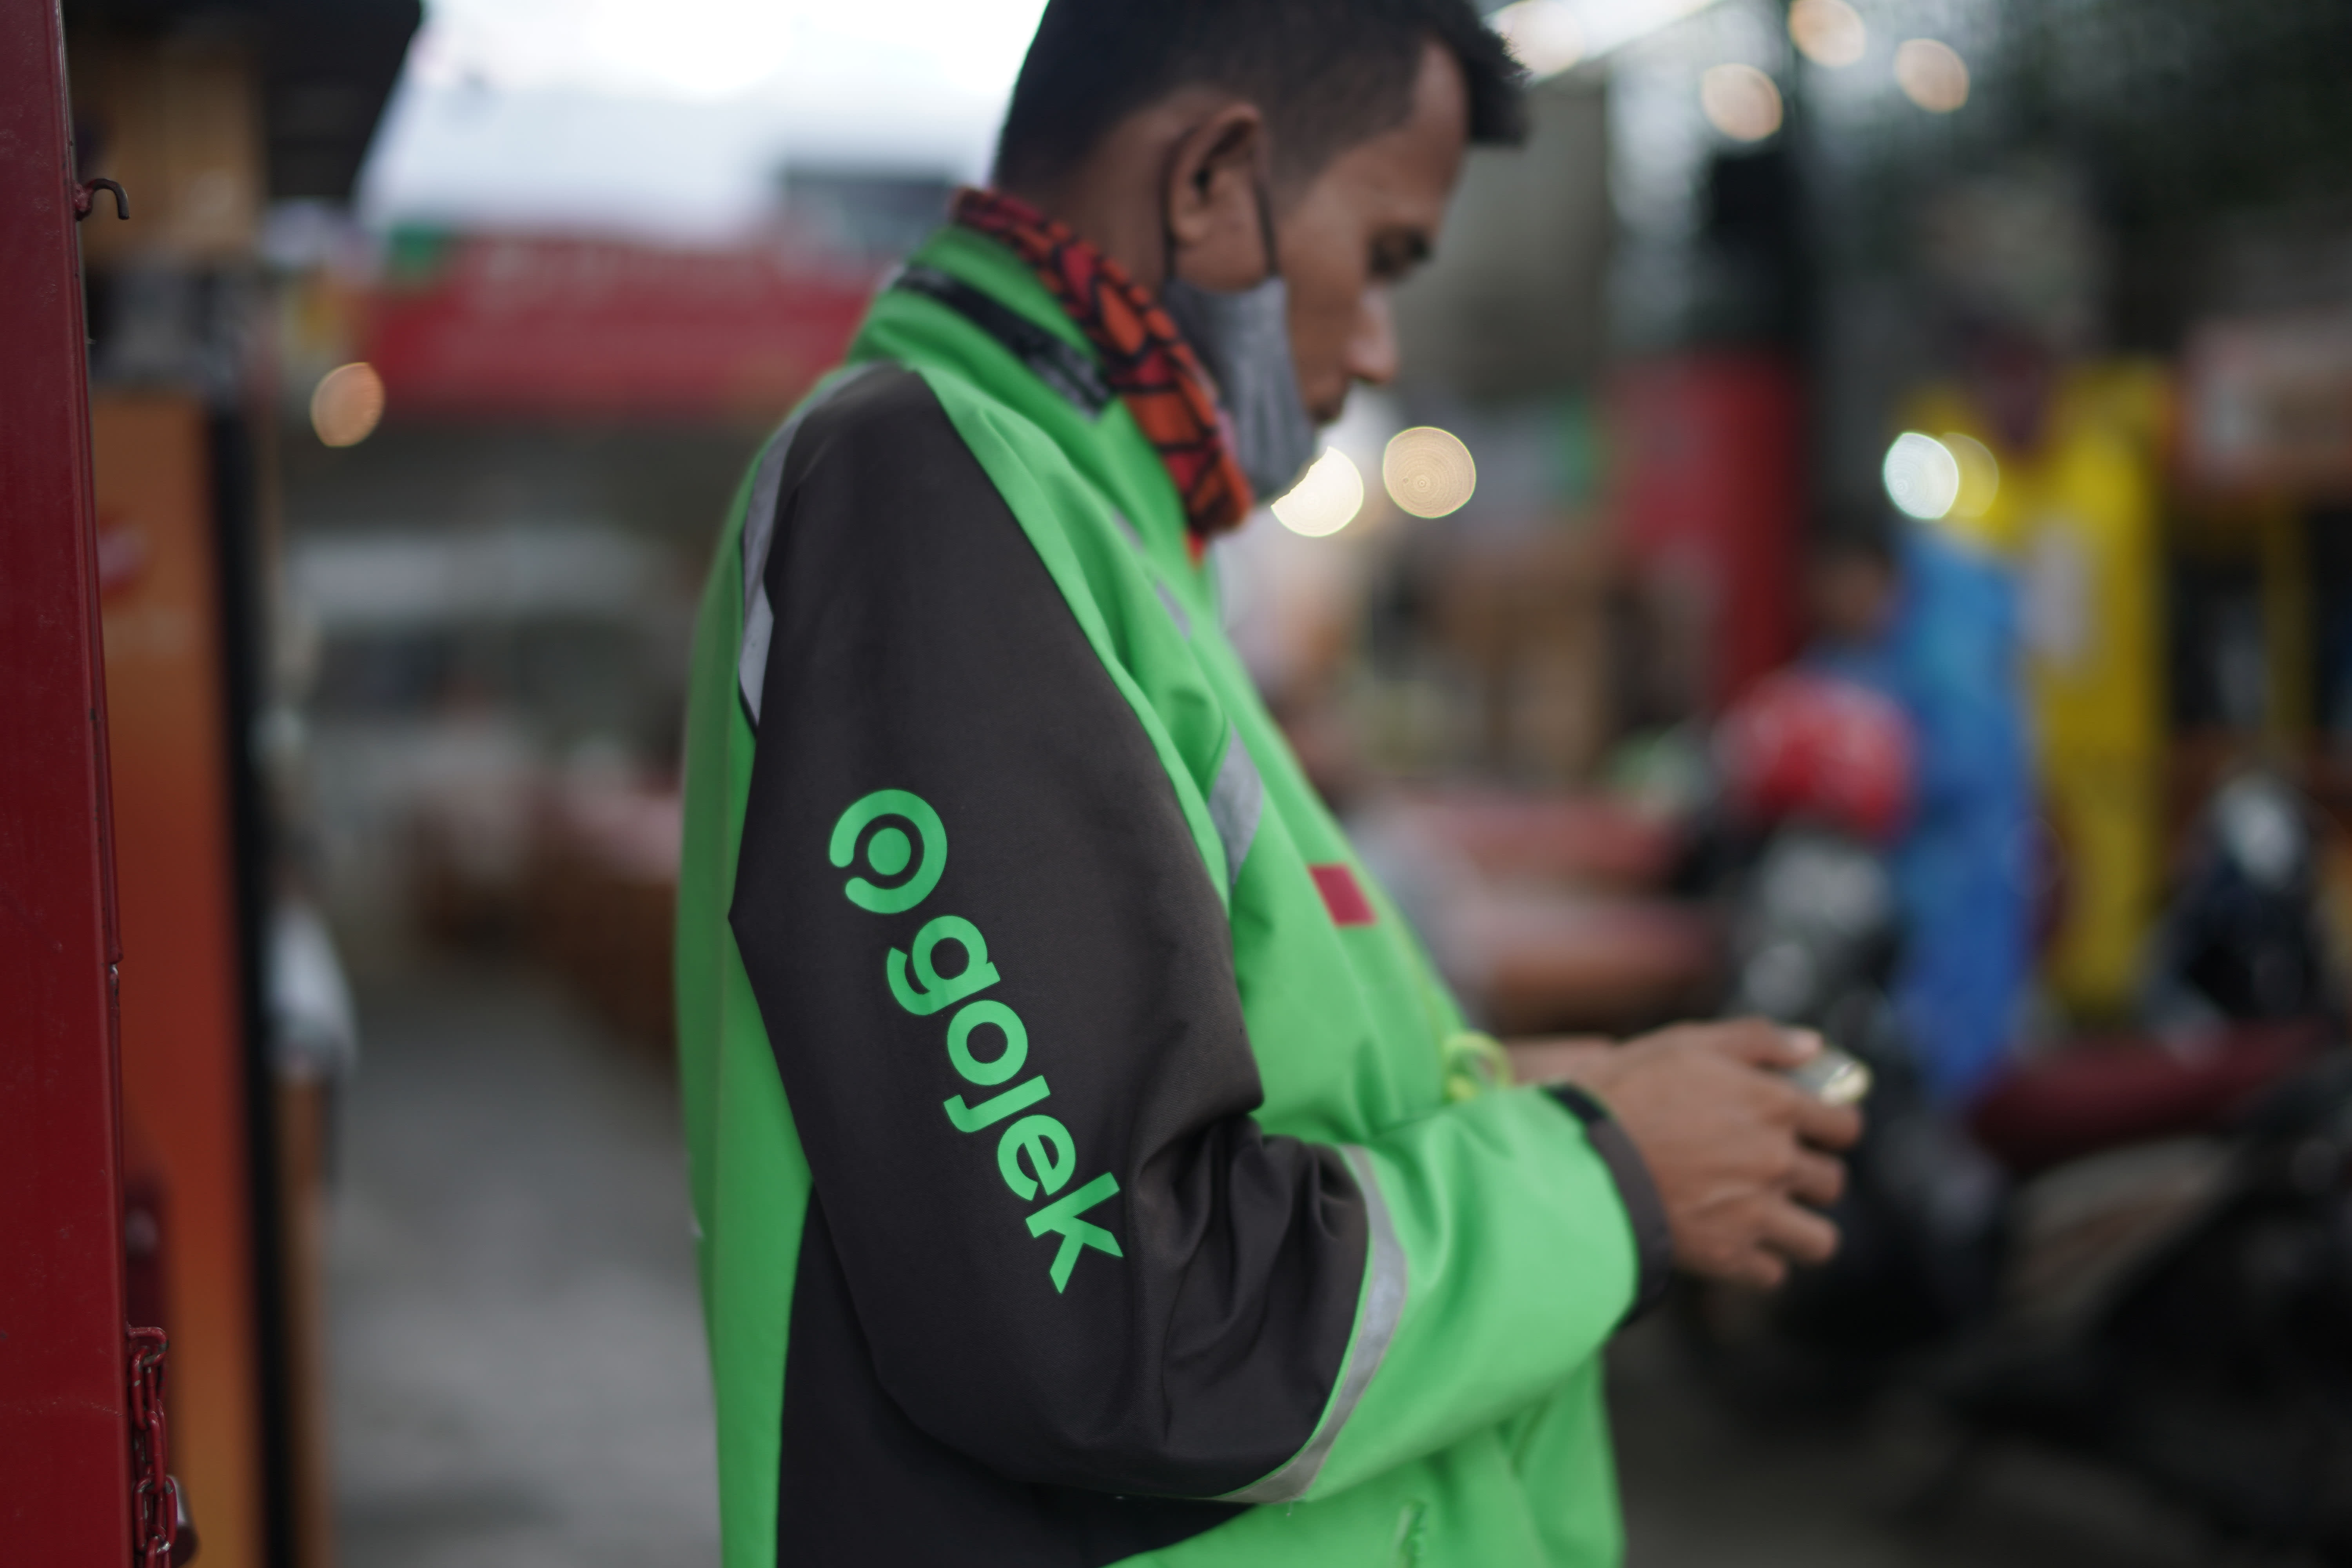 Indonesia's internet start-ups Gojek and Tokopedia announce merger